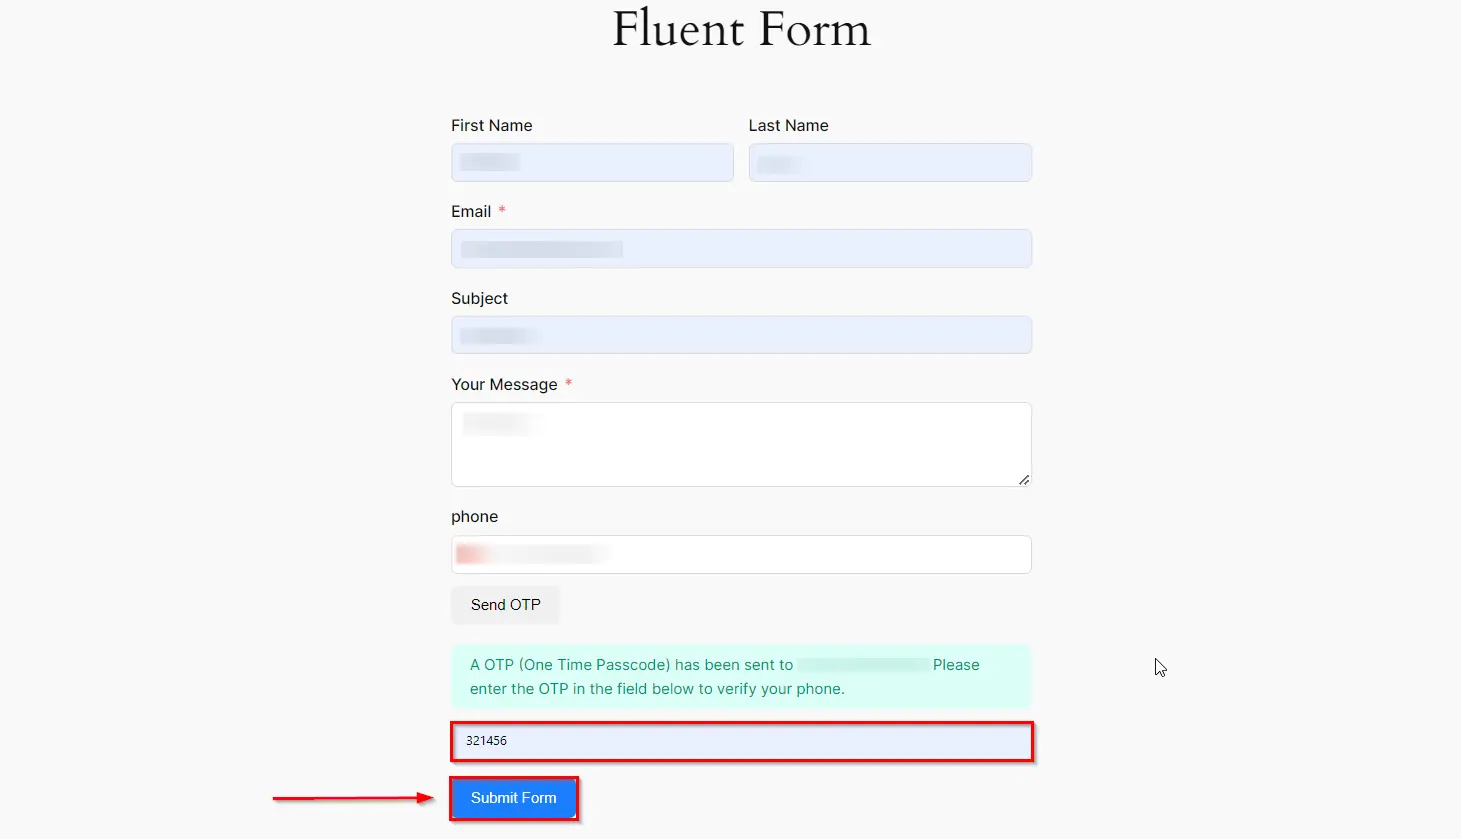 WordPress Fluent Form with OTP - Enter OTP